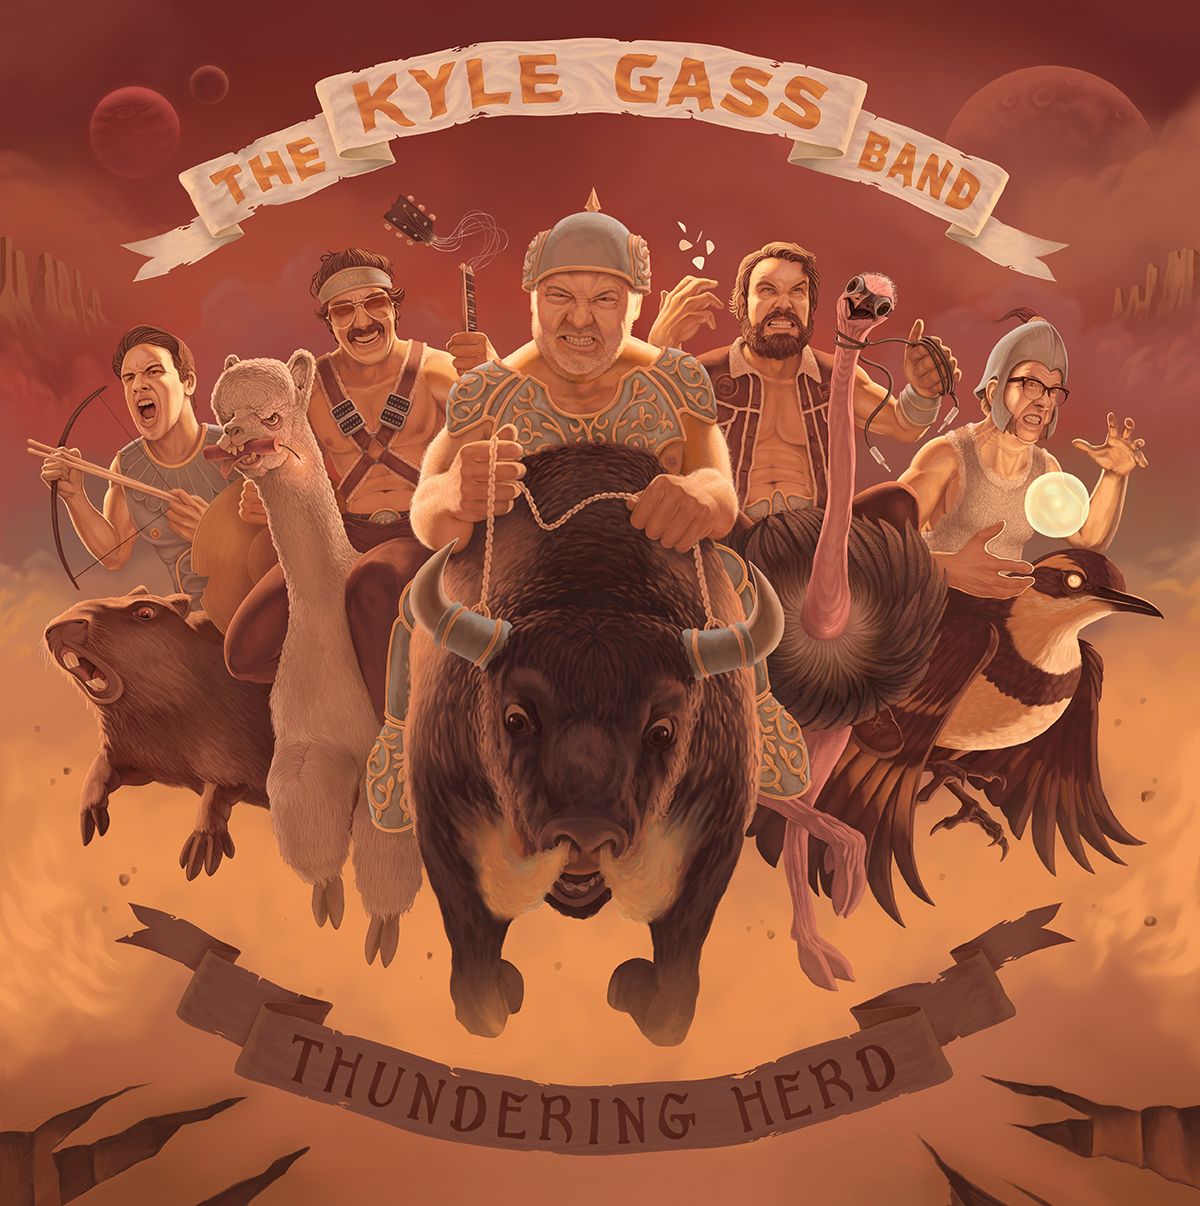 Kyle Gass Band, Thundering Herd LP - 2016